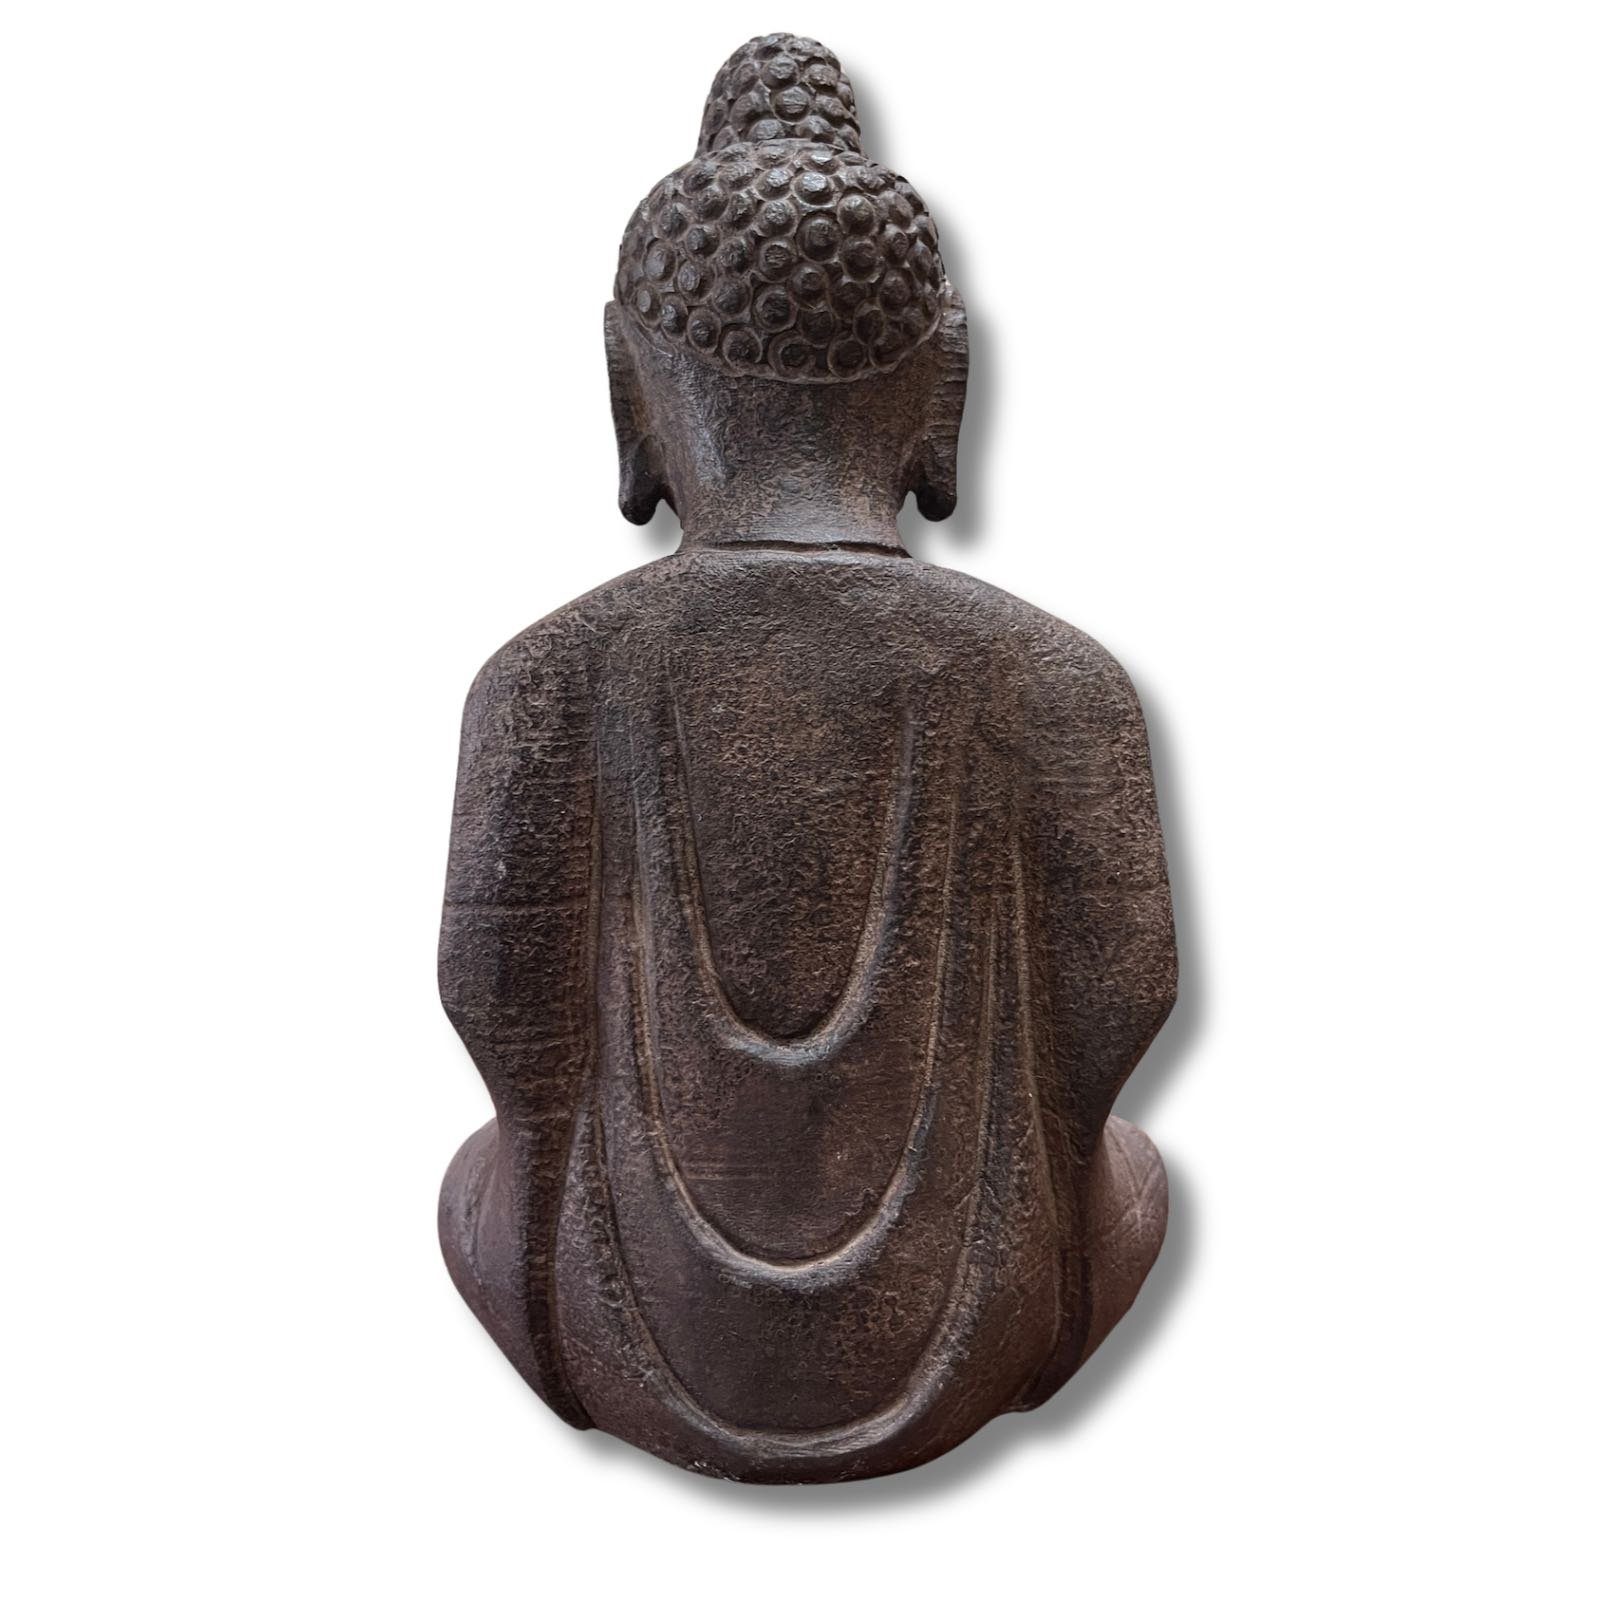 Asien LifeStyle Buddhafigur Tibet China Meditation 36cm Garten groß Buddha Figur Naturstein